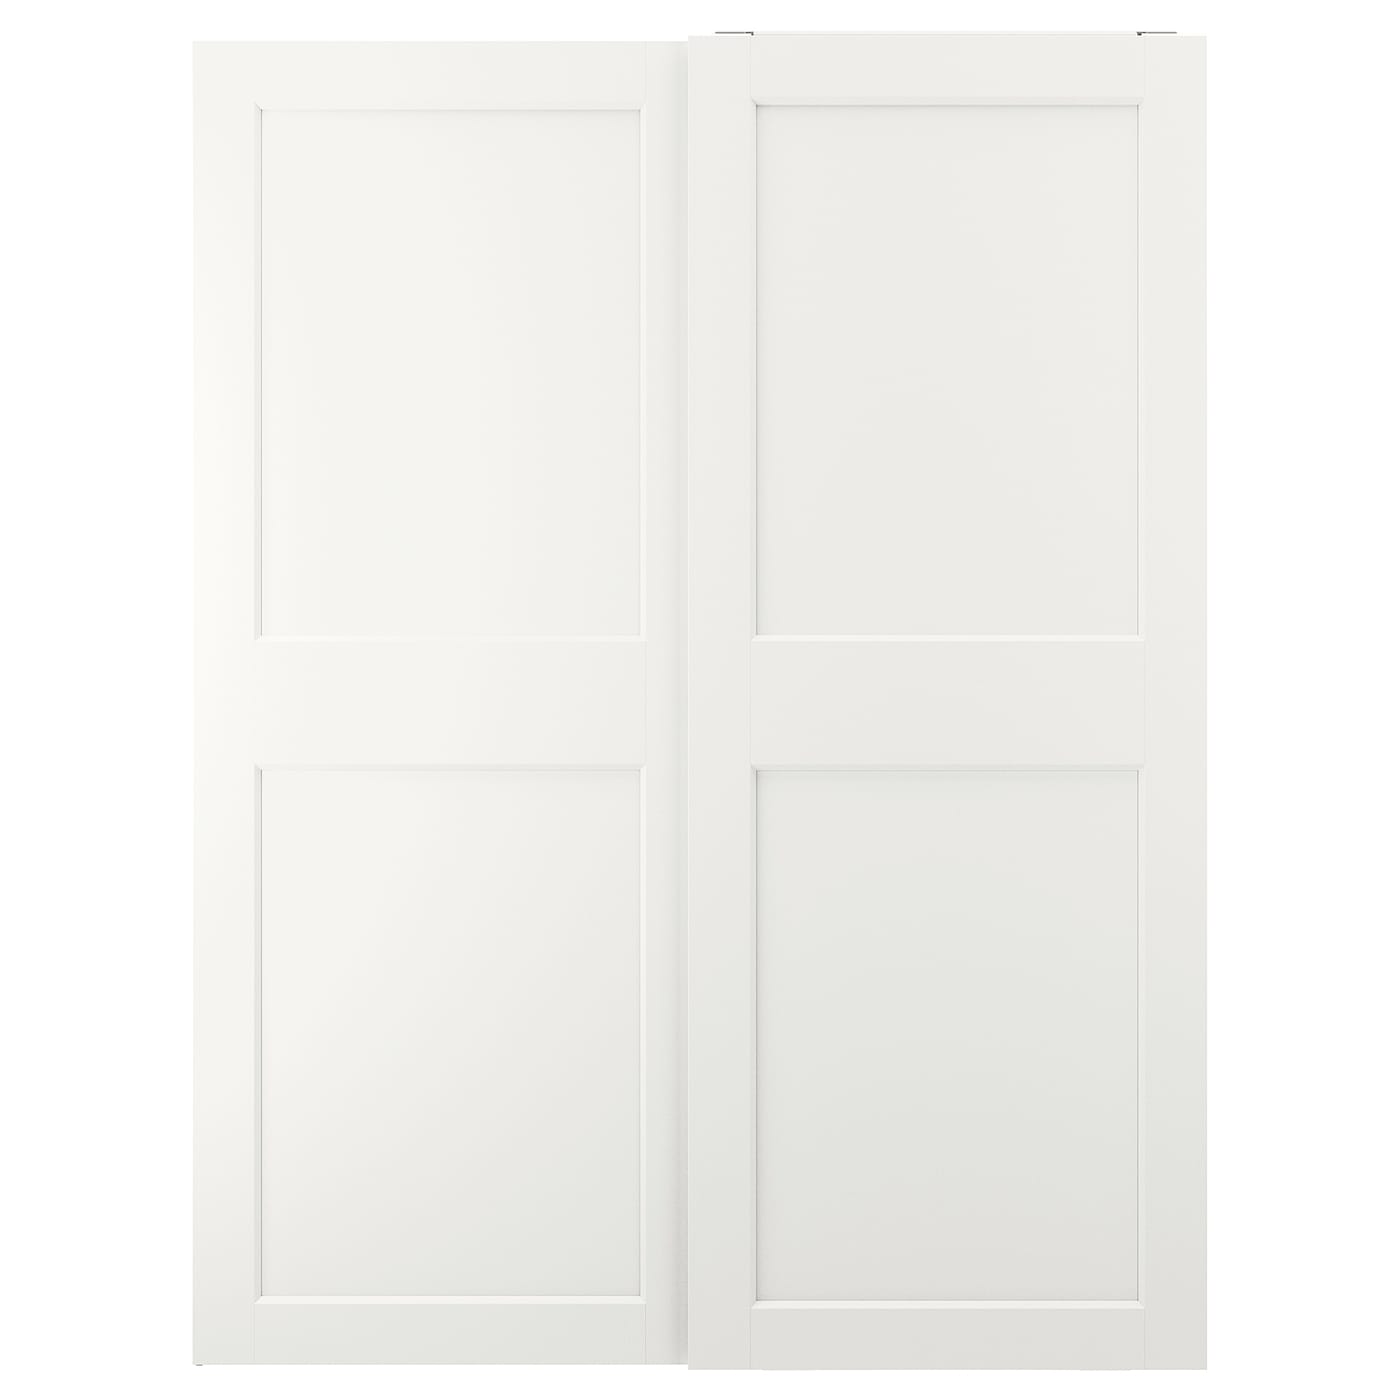 Пара рам раздвижных дверей - GRIMO IKEA/ ГРИМО ИКЕА, 150х201 см, белый